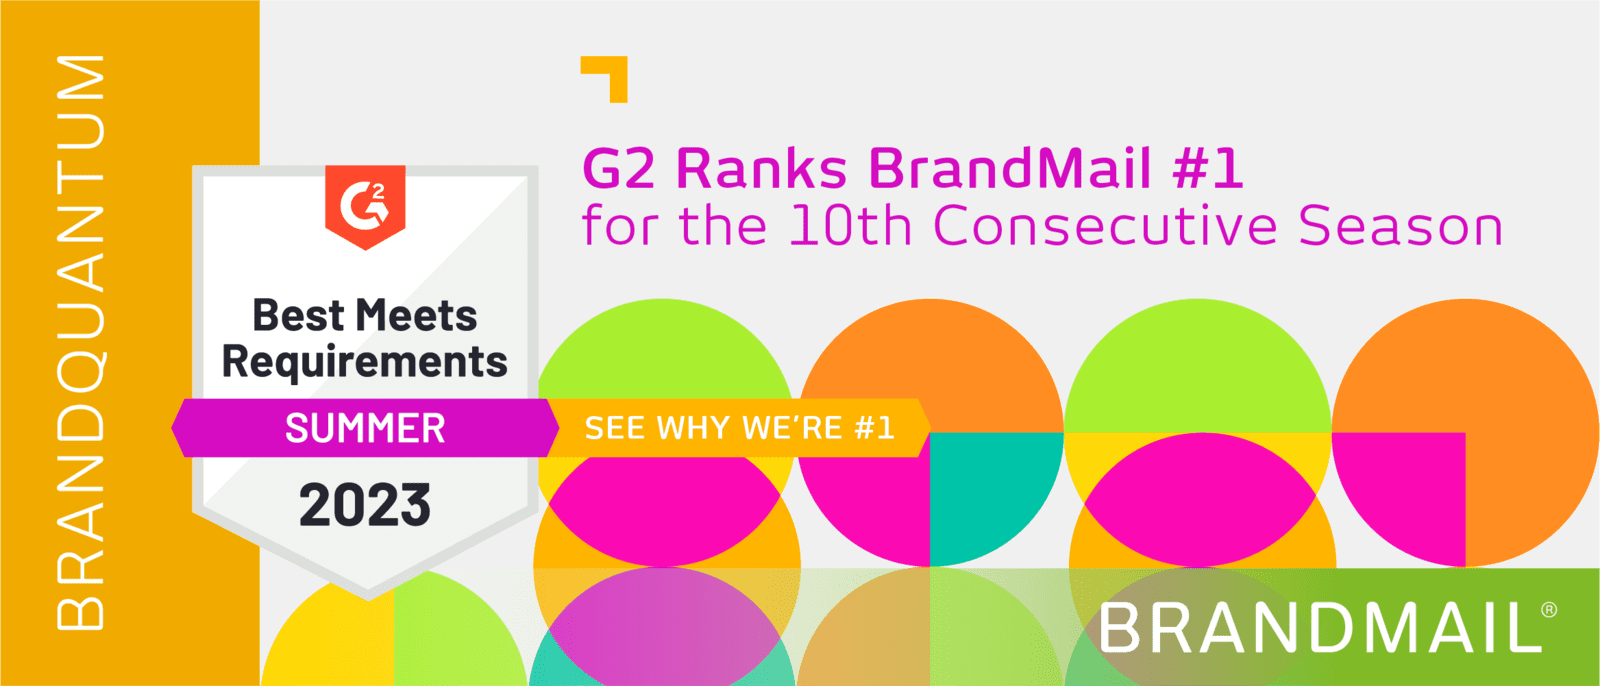 G2 Ranks BrandMail #1 for the 10th Consecutive Season